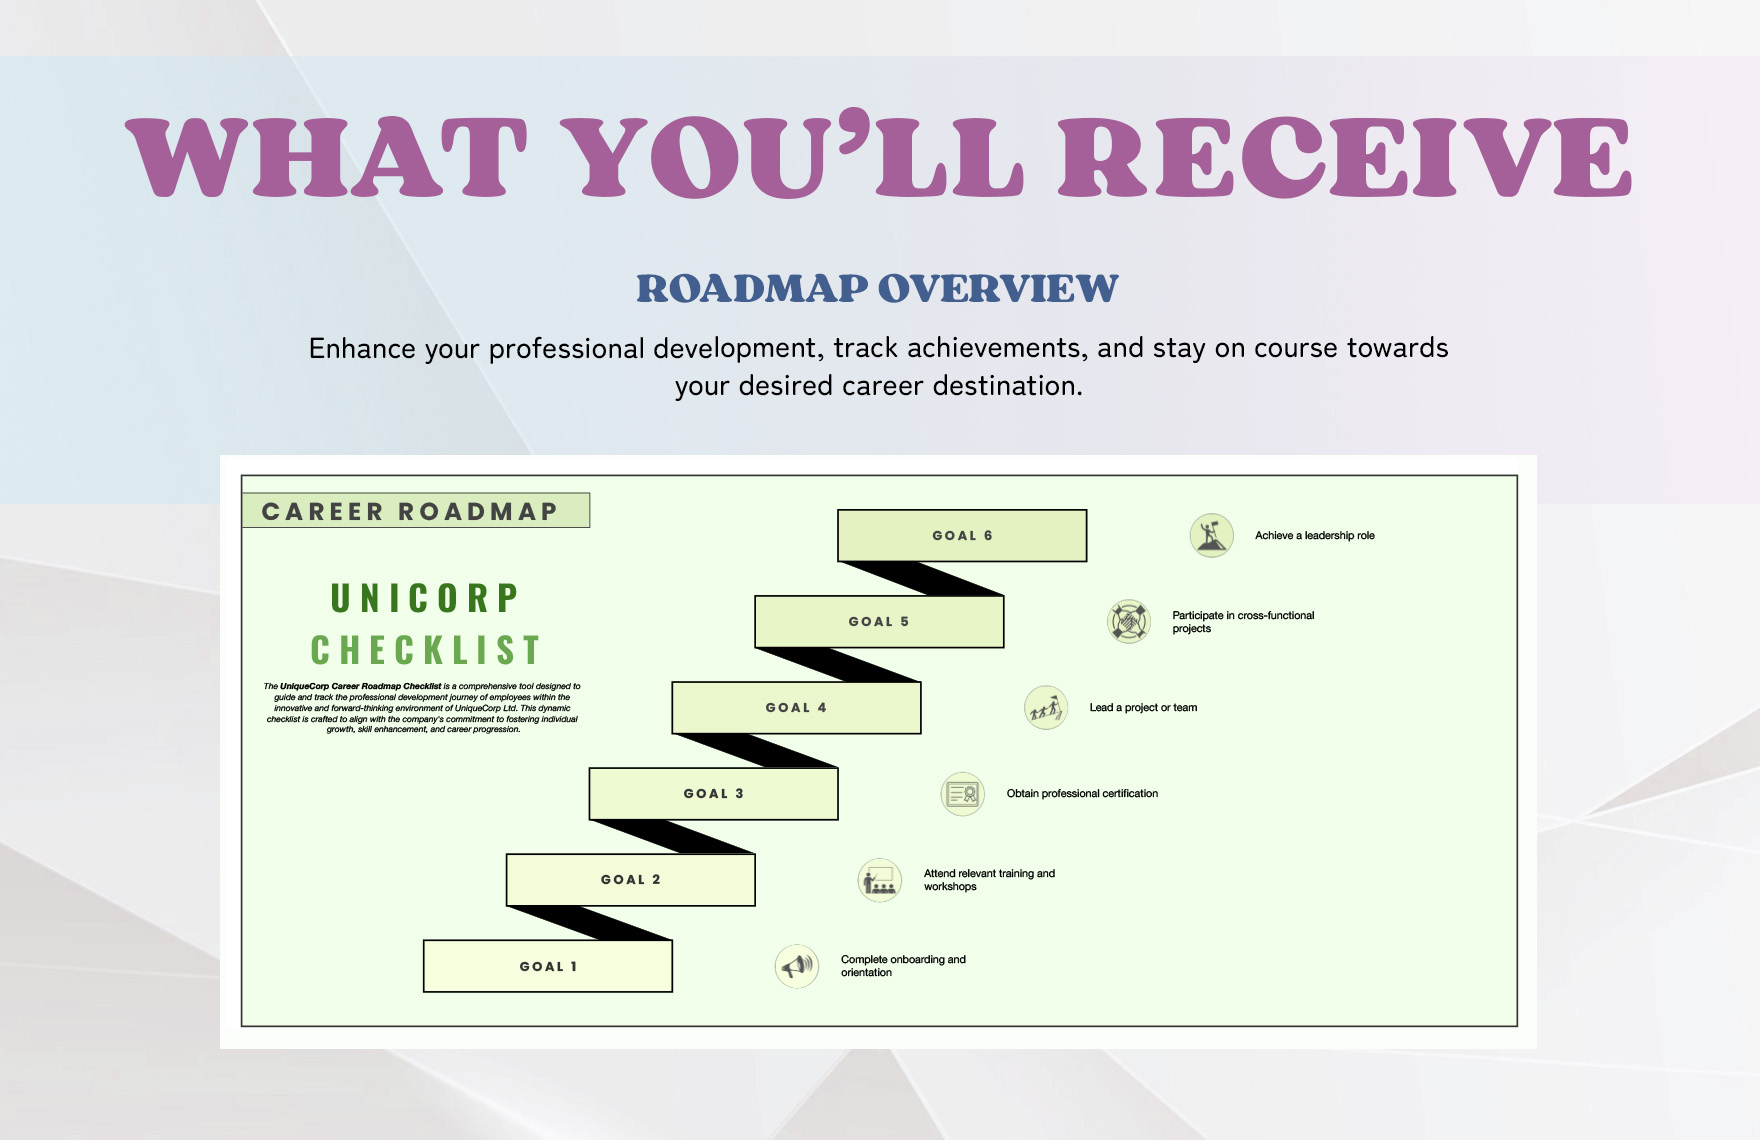 Career Roadmap Checklist Template